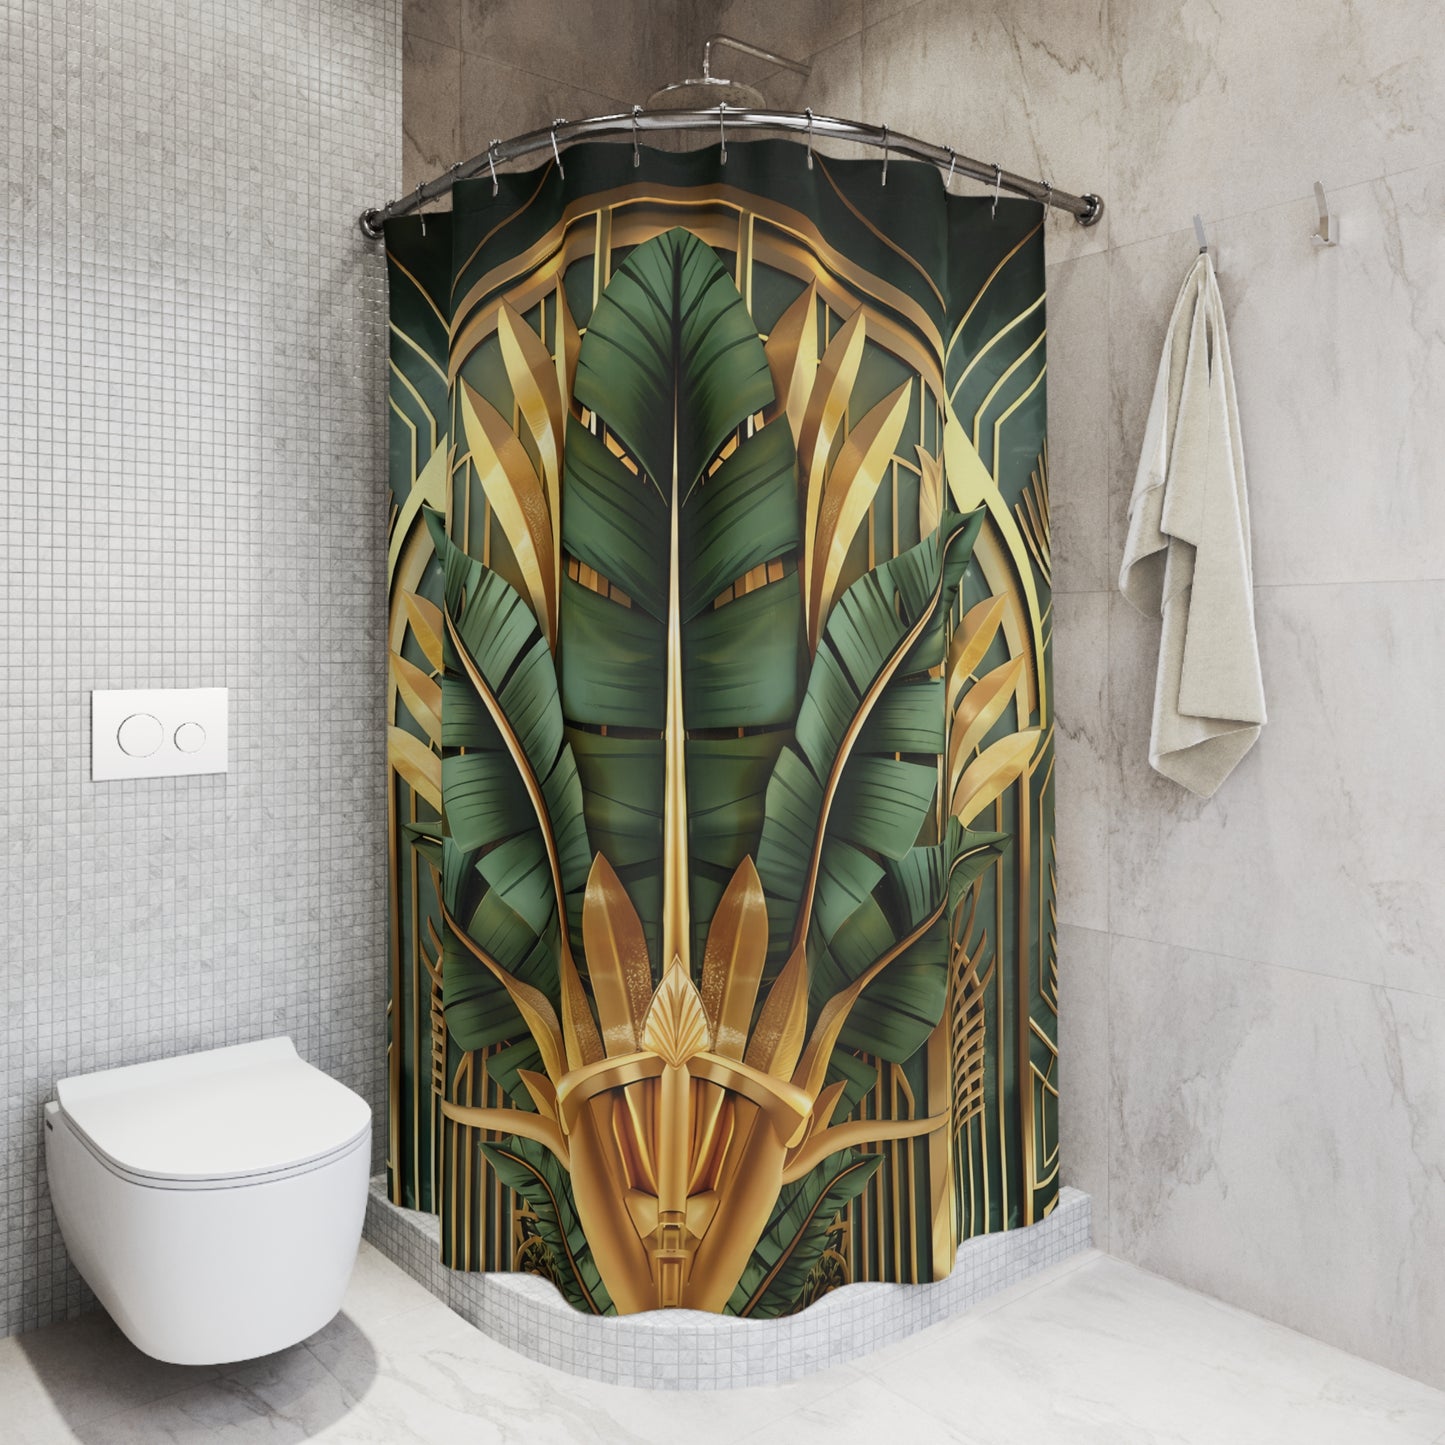 Tropical Banana Leaves Palm Tree Shower Curtain Bathroom Decor